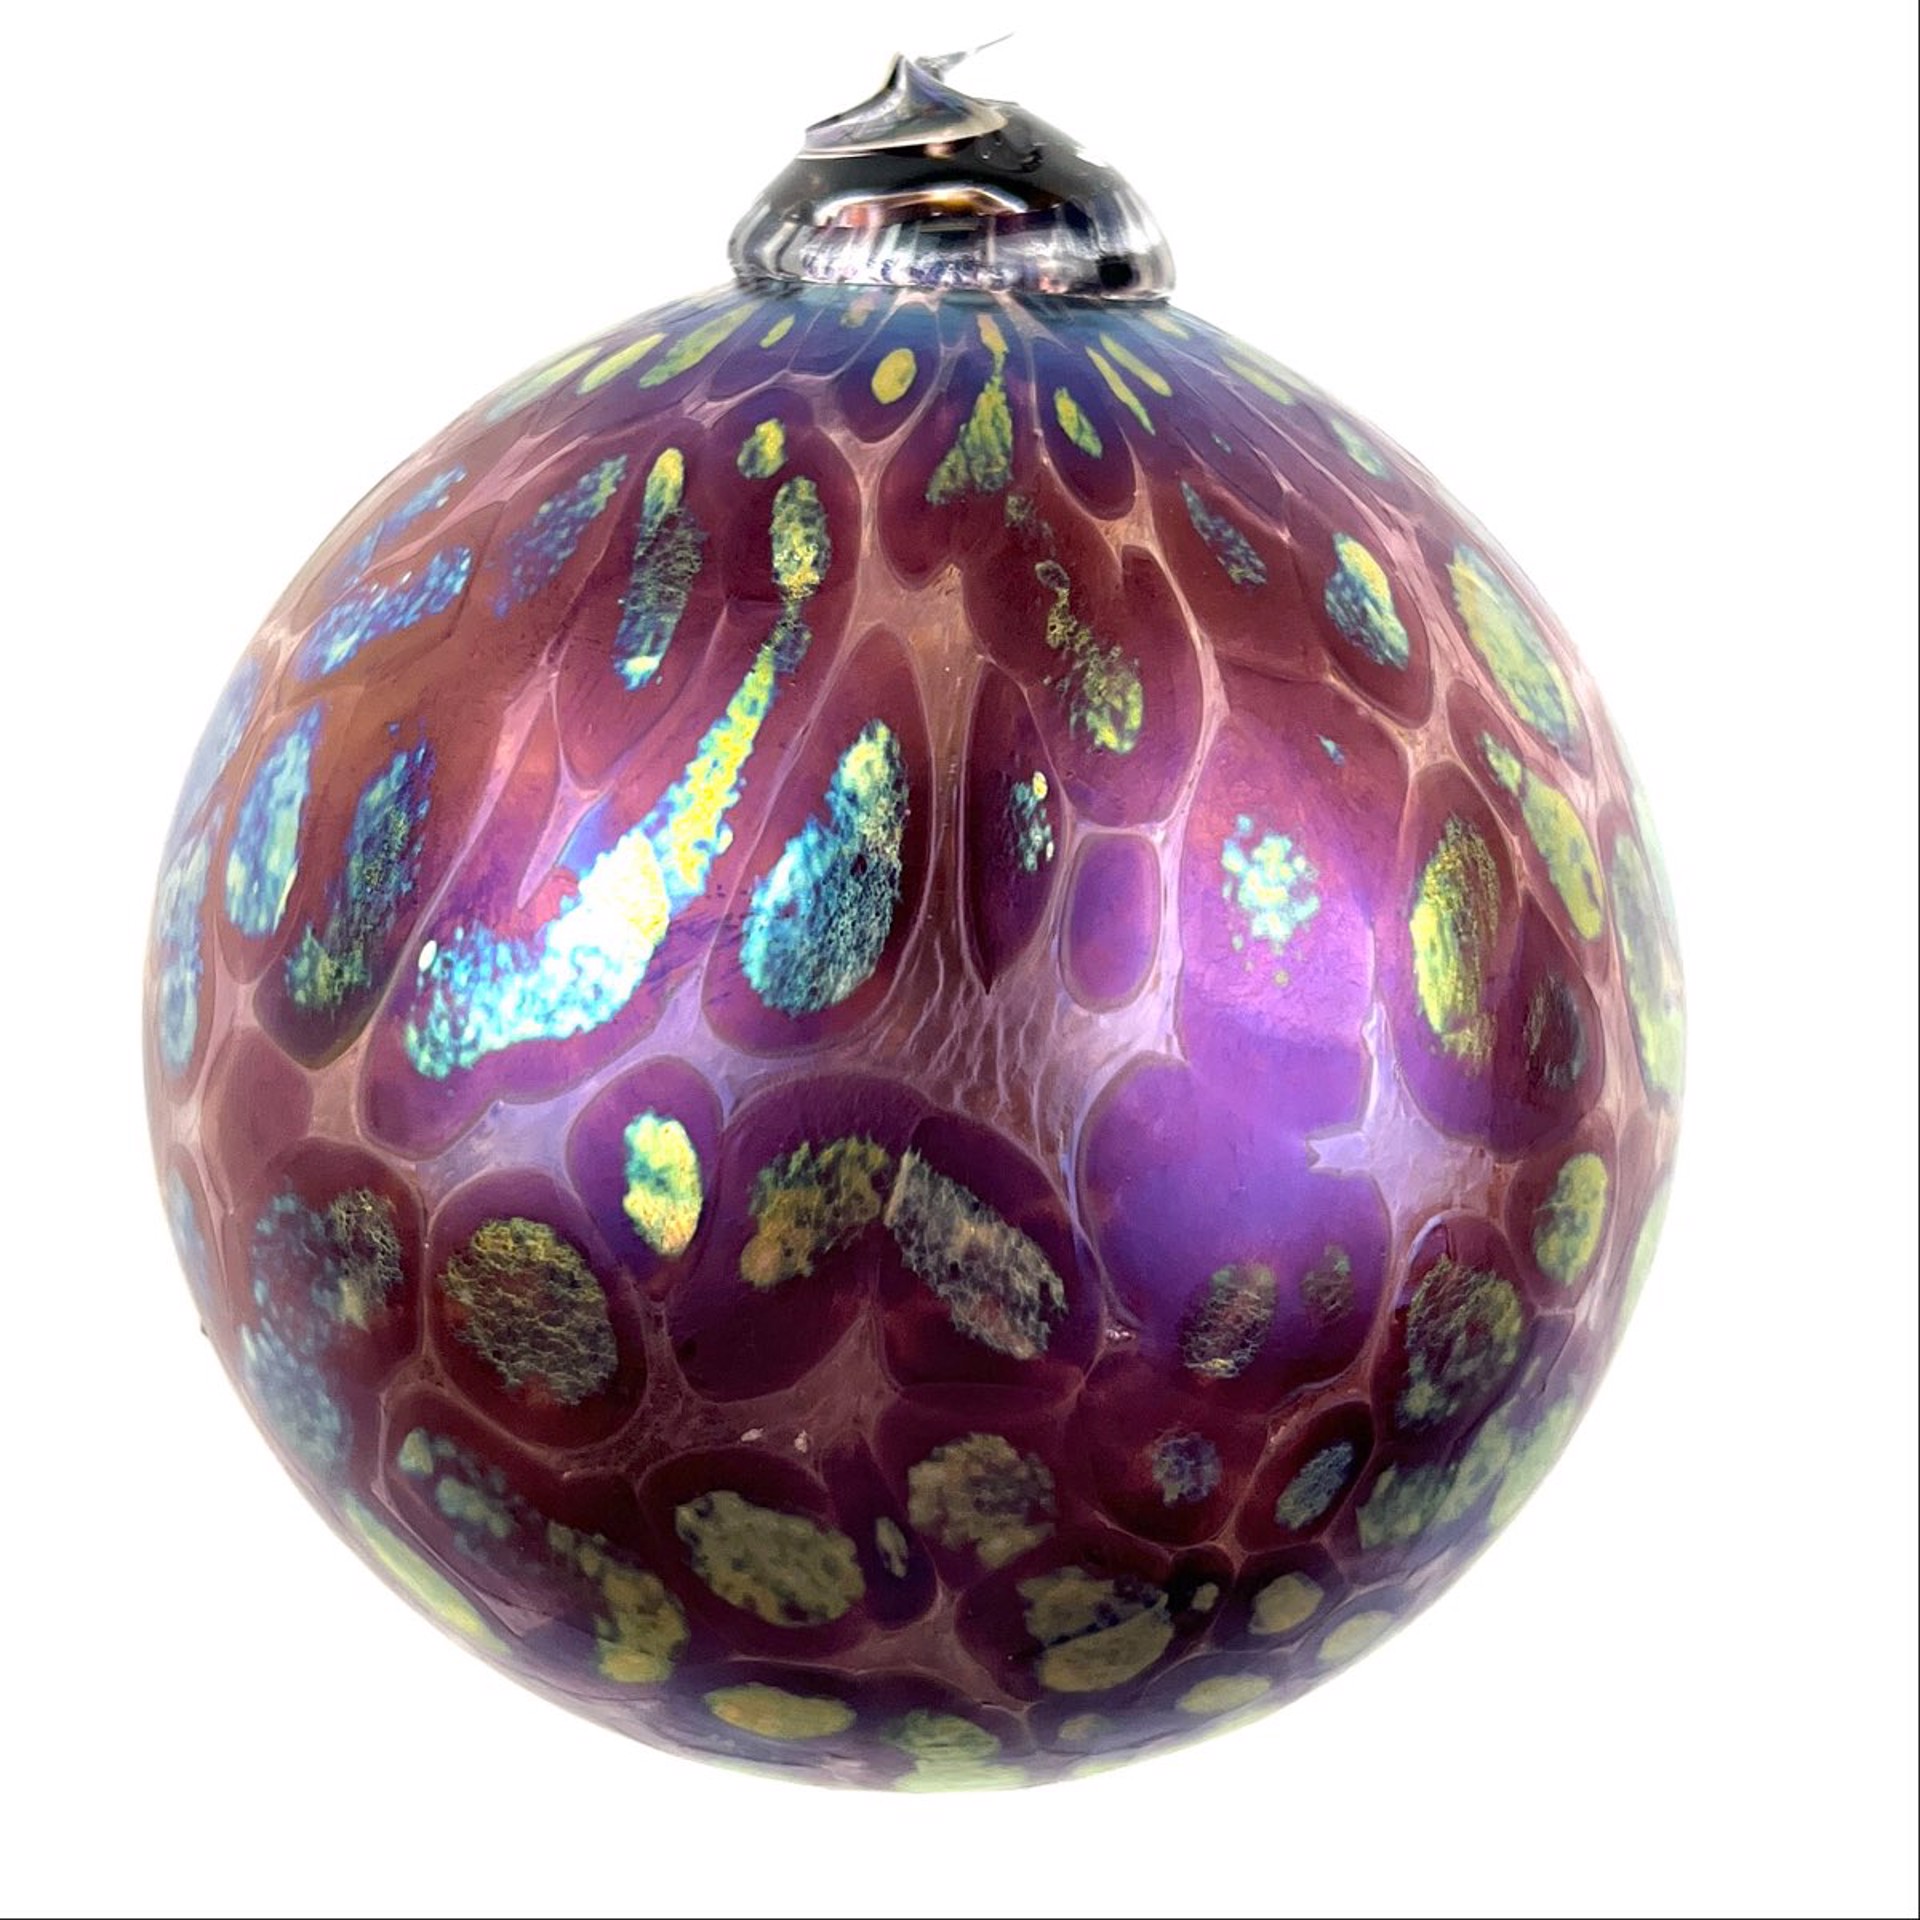 Dapple Magenta Ornament by Furnace Glass